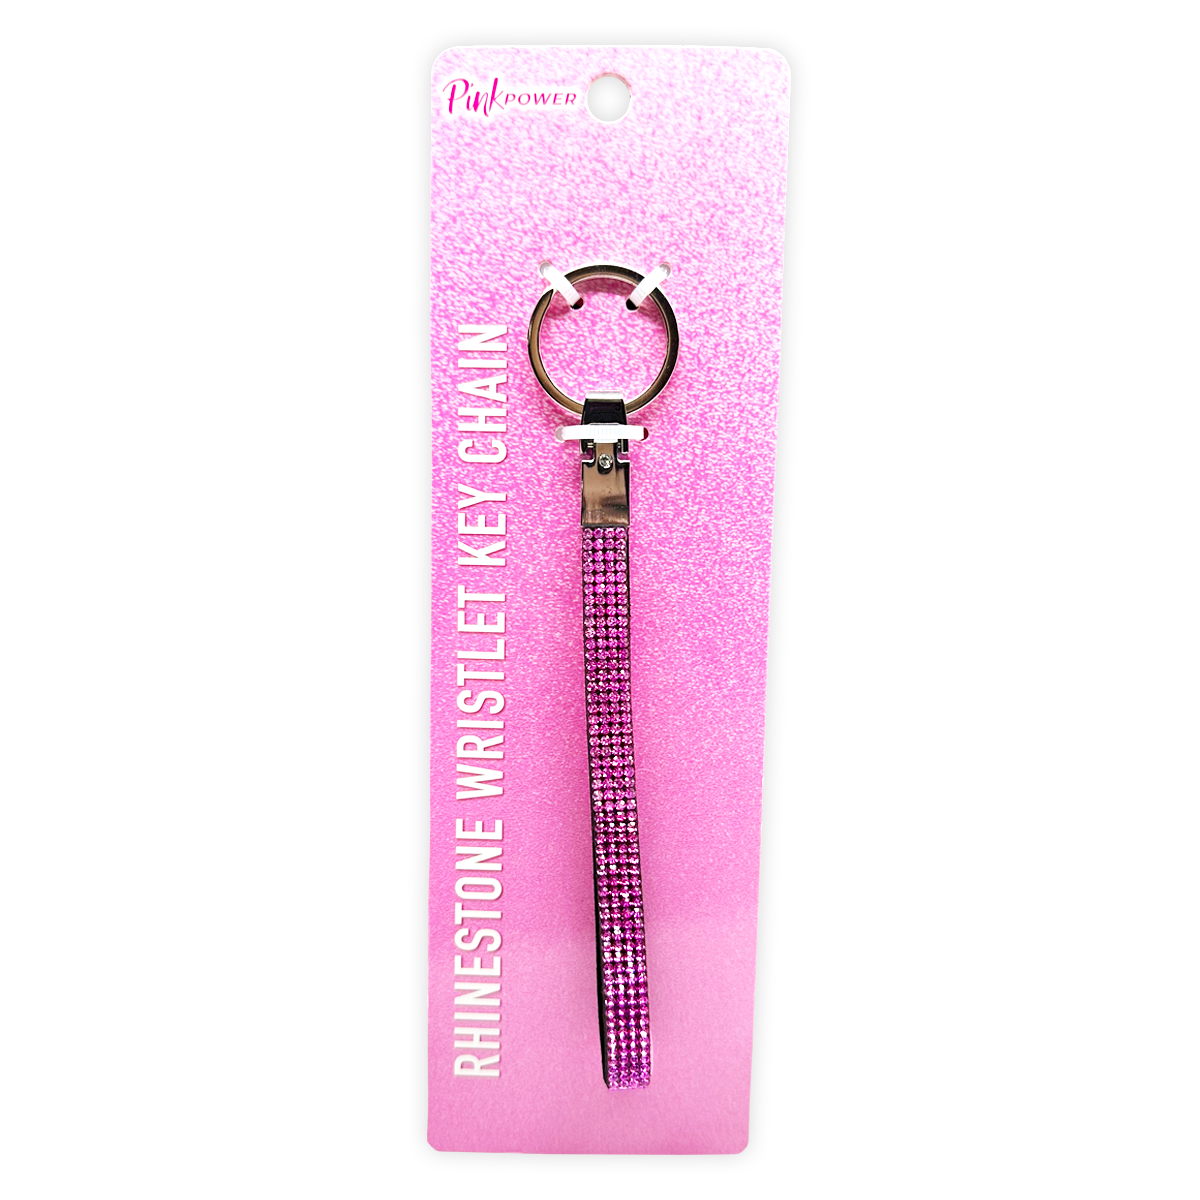 ITEM NUMBER 088529 Pink Power Key Chain Lanyard & Pen Assortment 22 PIECES PER DISPLAY